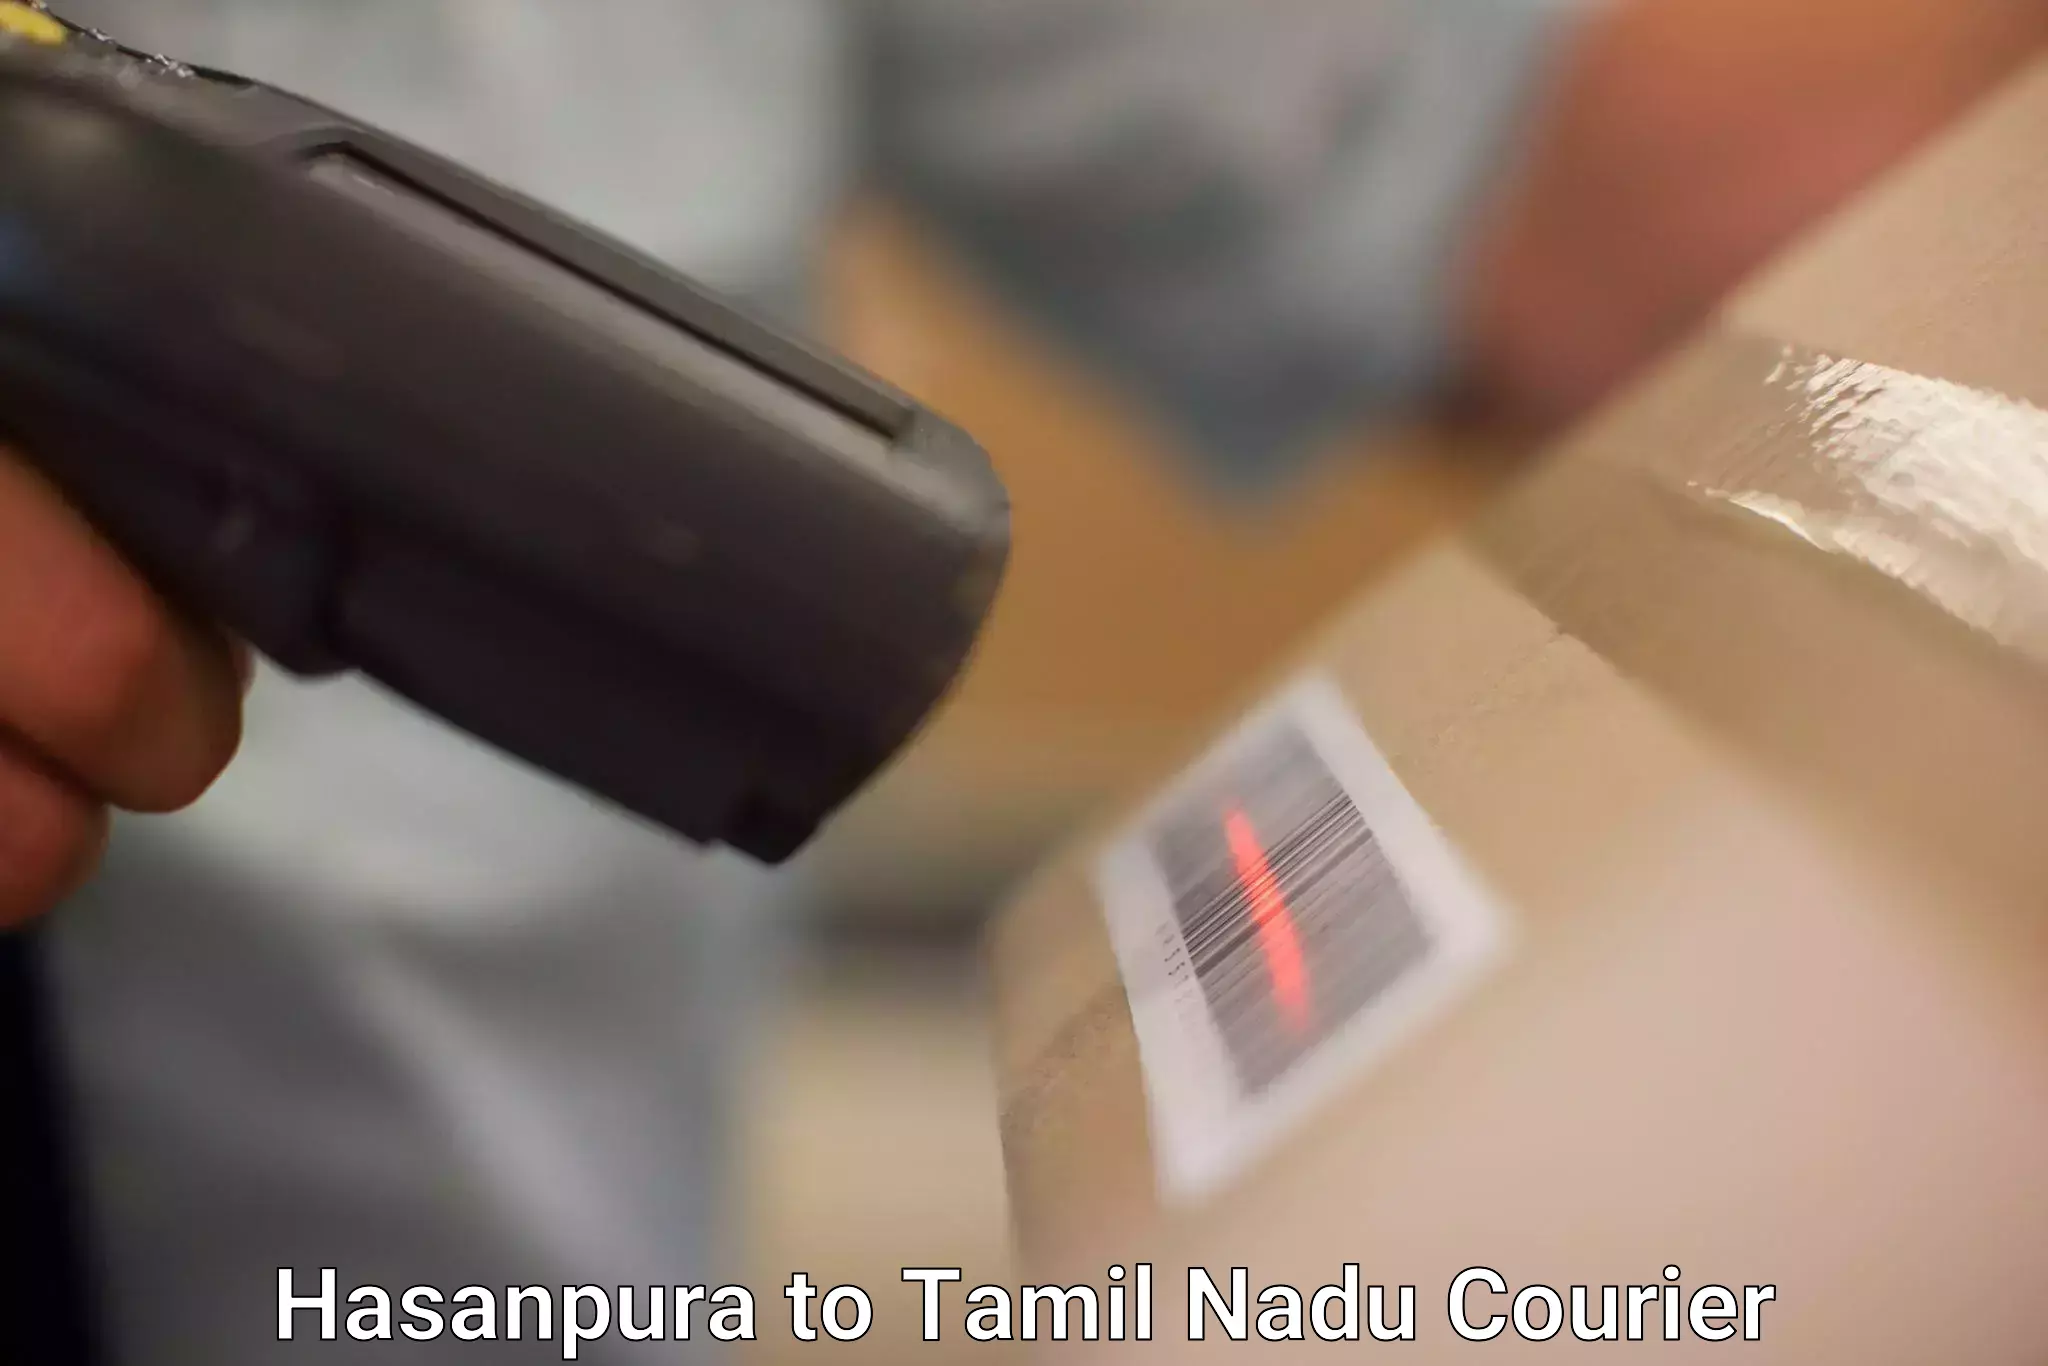 Courier service innovation Hasanpura to Tamil Nadu